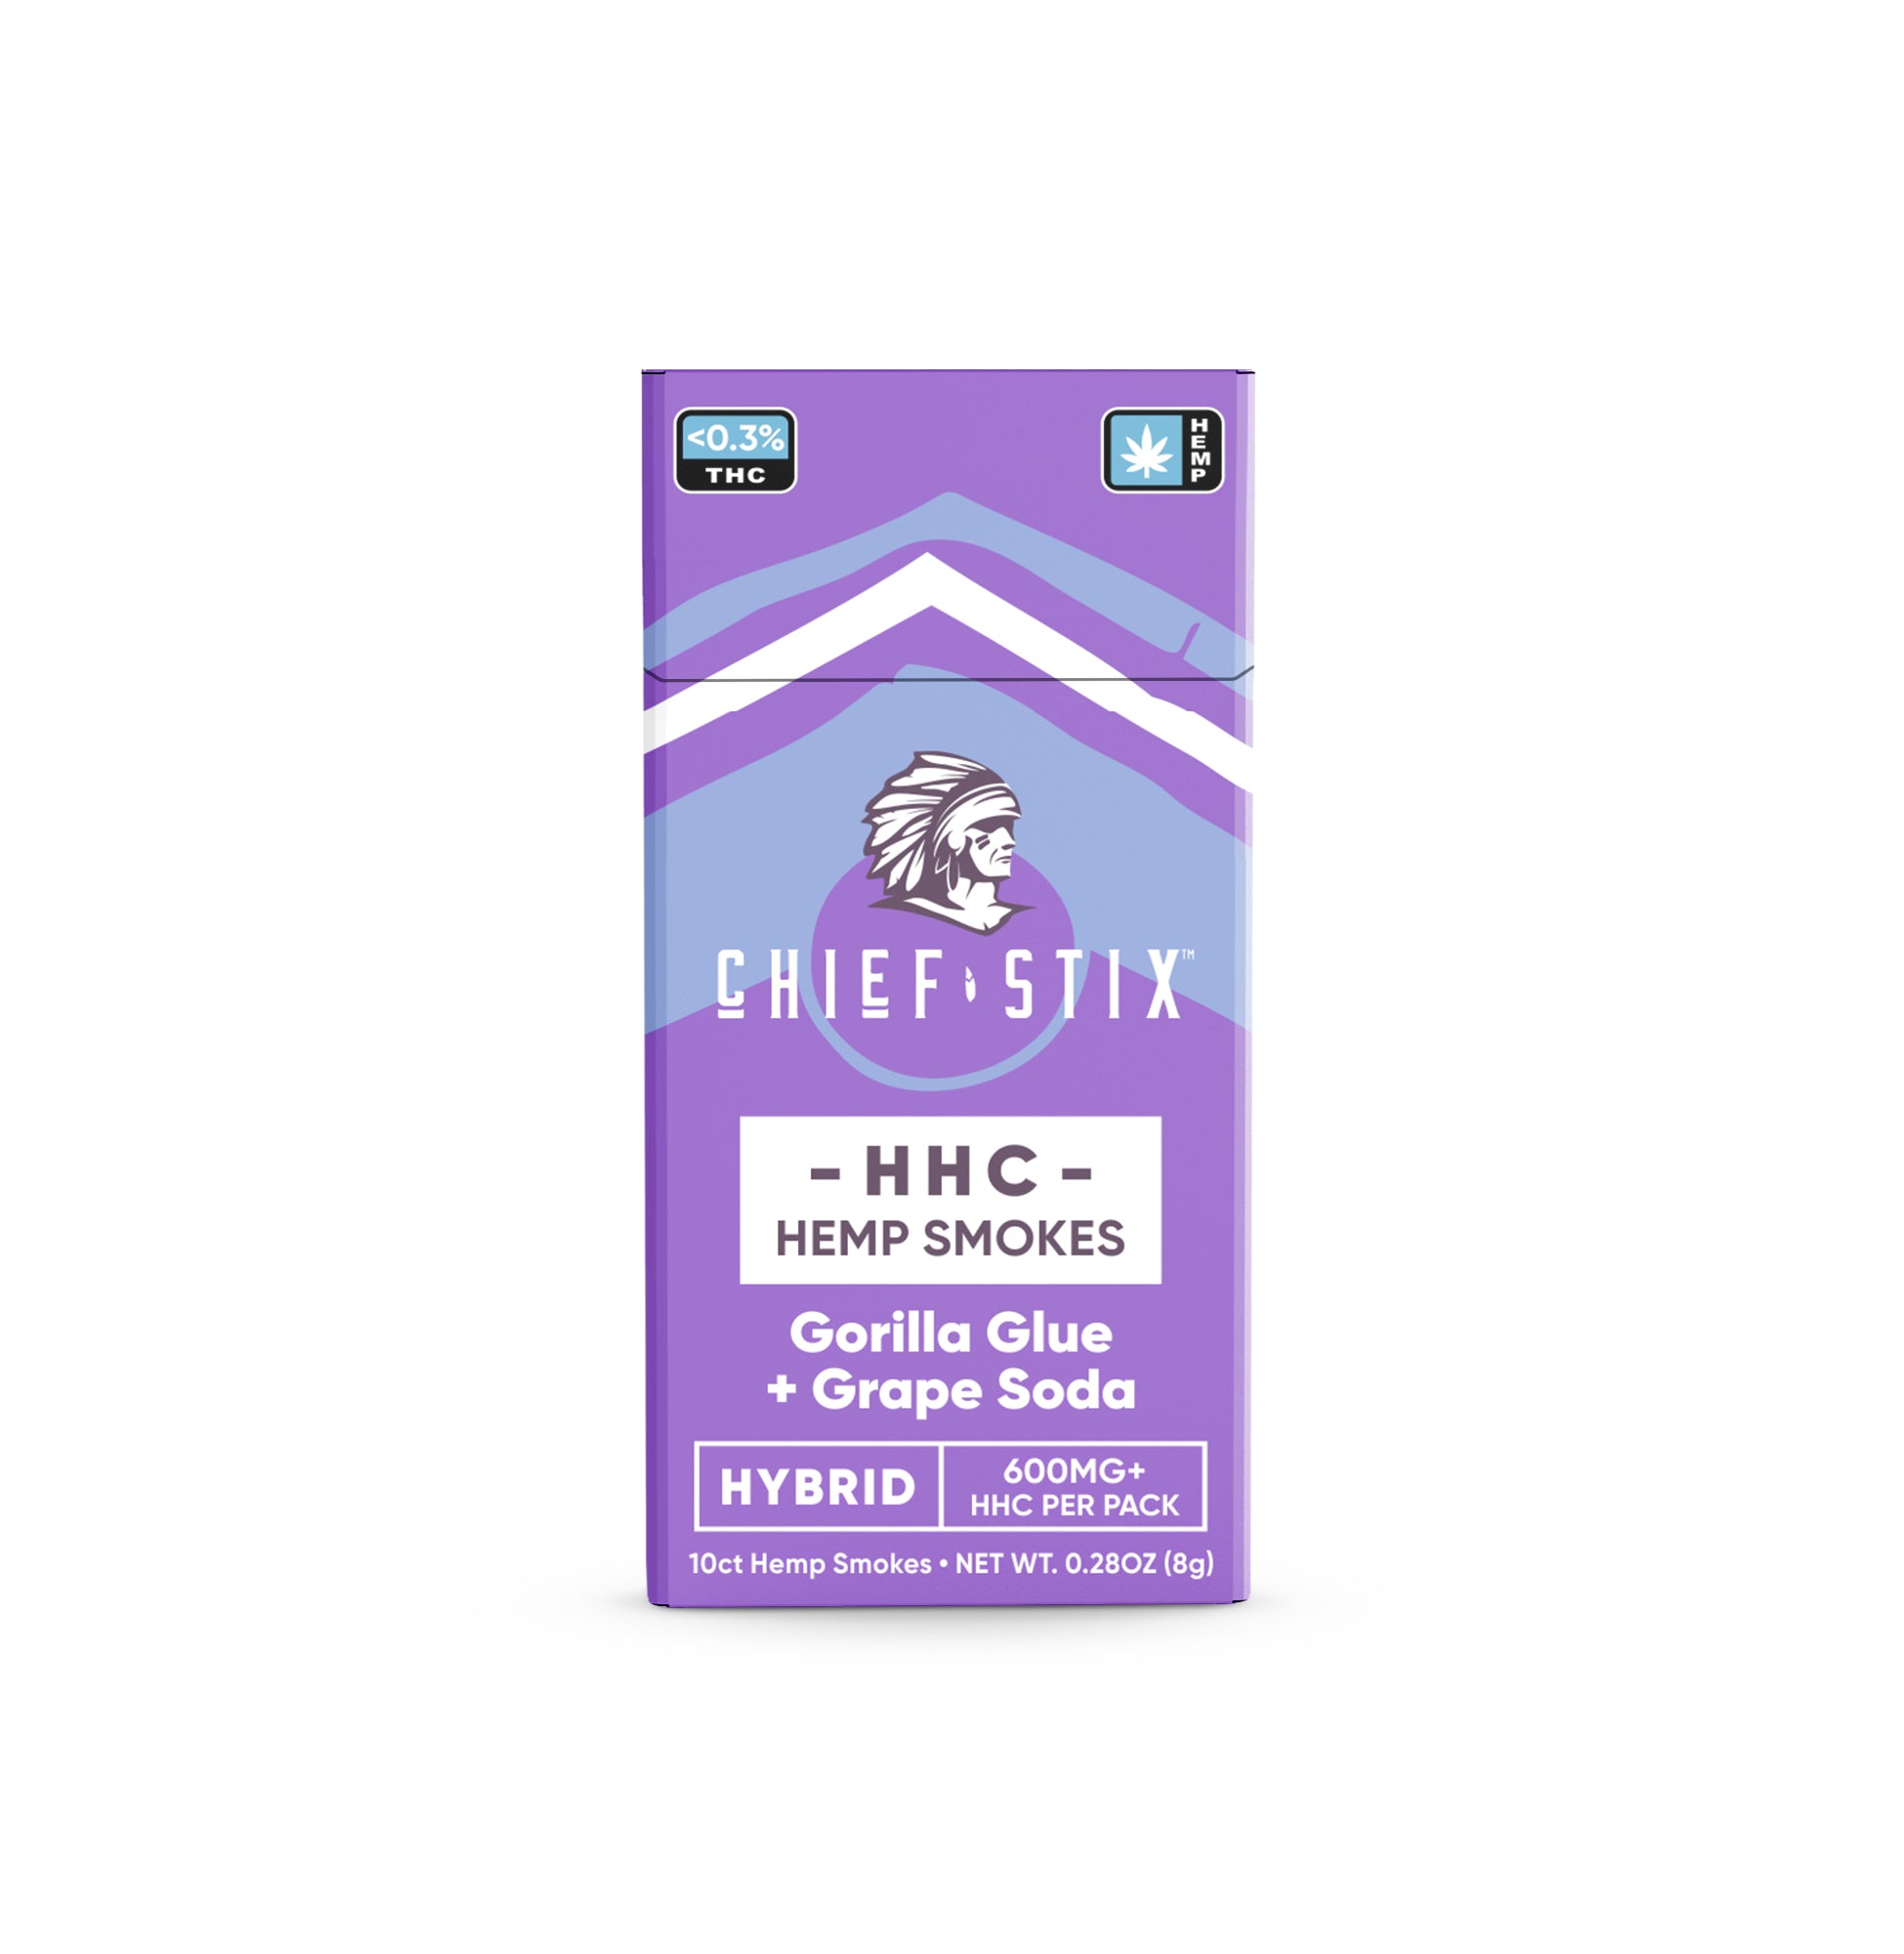 Chief Stix HHC Infused Hemp Smokes Gorilla Glue + Grape Soda Hybrid 600mg (10ct) - Carton